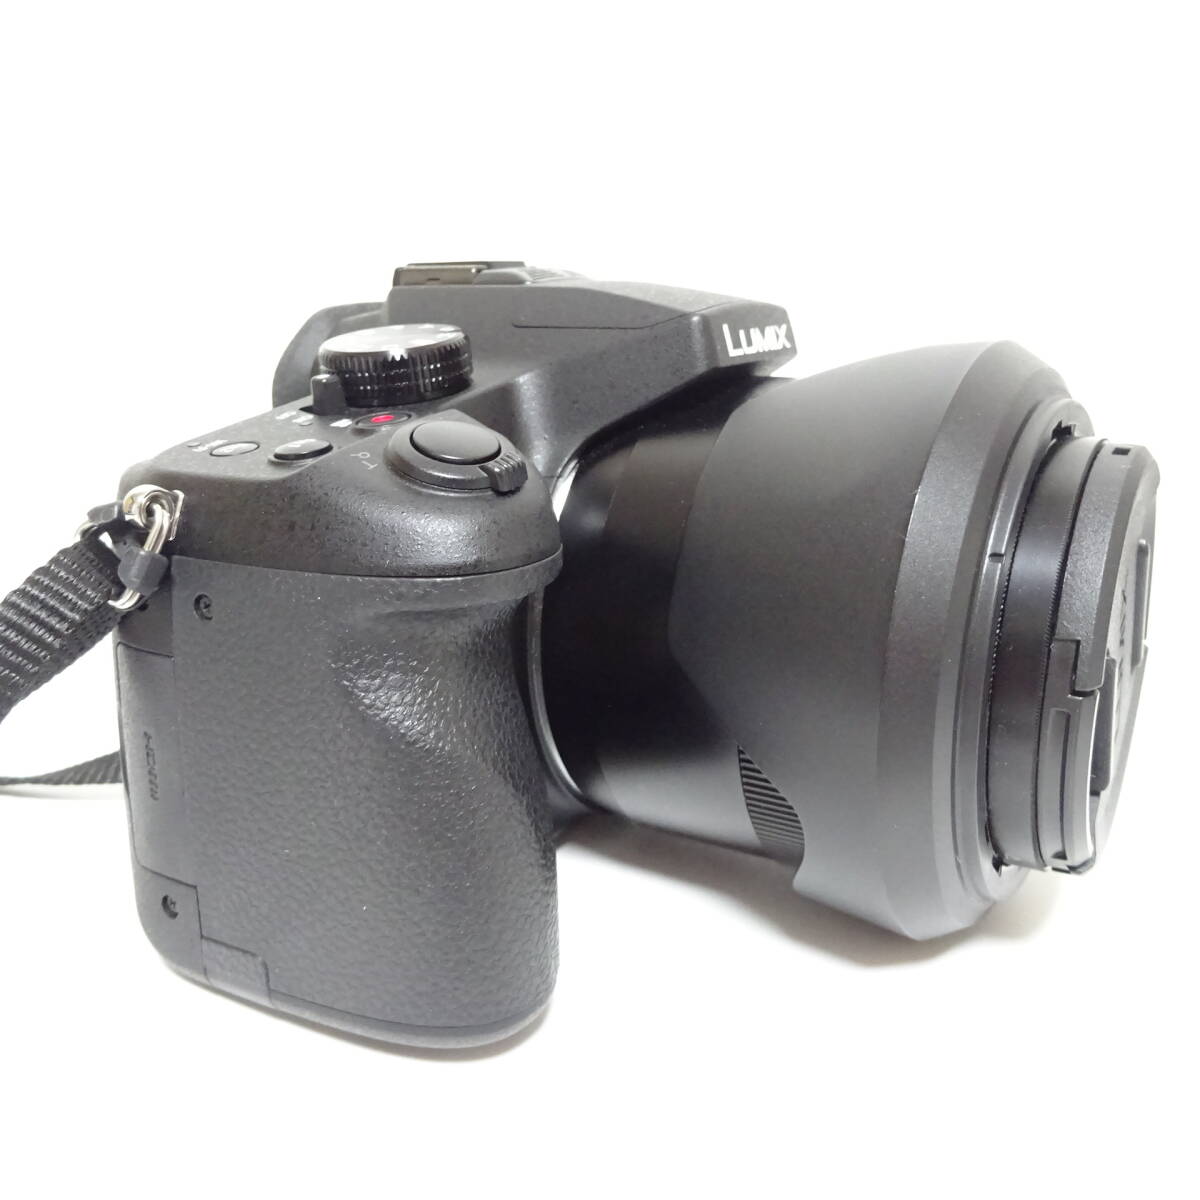 Panasonic LUMIX DMC-FZ1000 digital single-lens camera operation not yet verification 80 size shipping K-2617965-203-mrrz